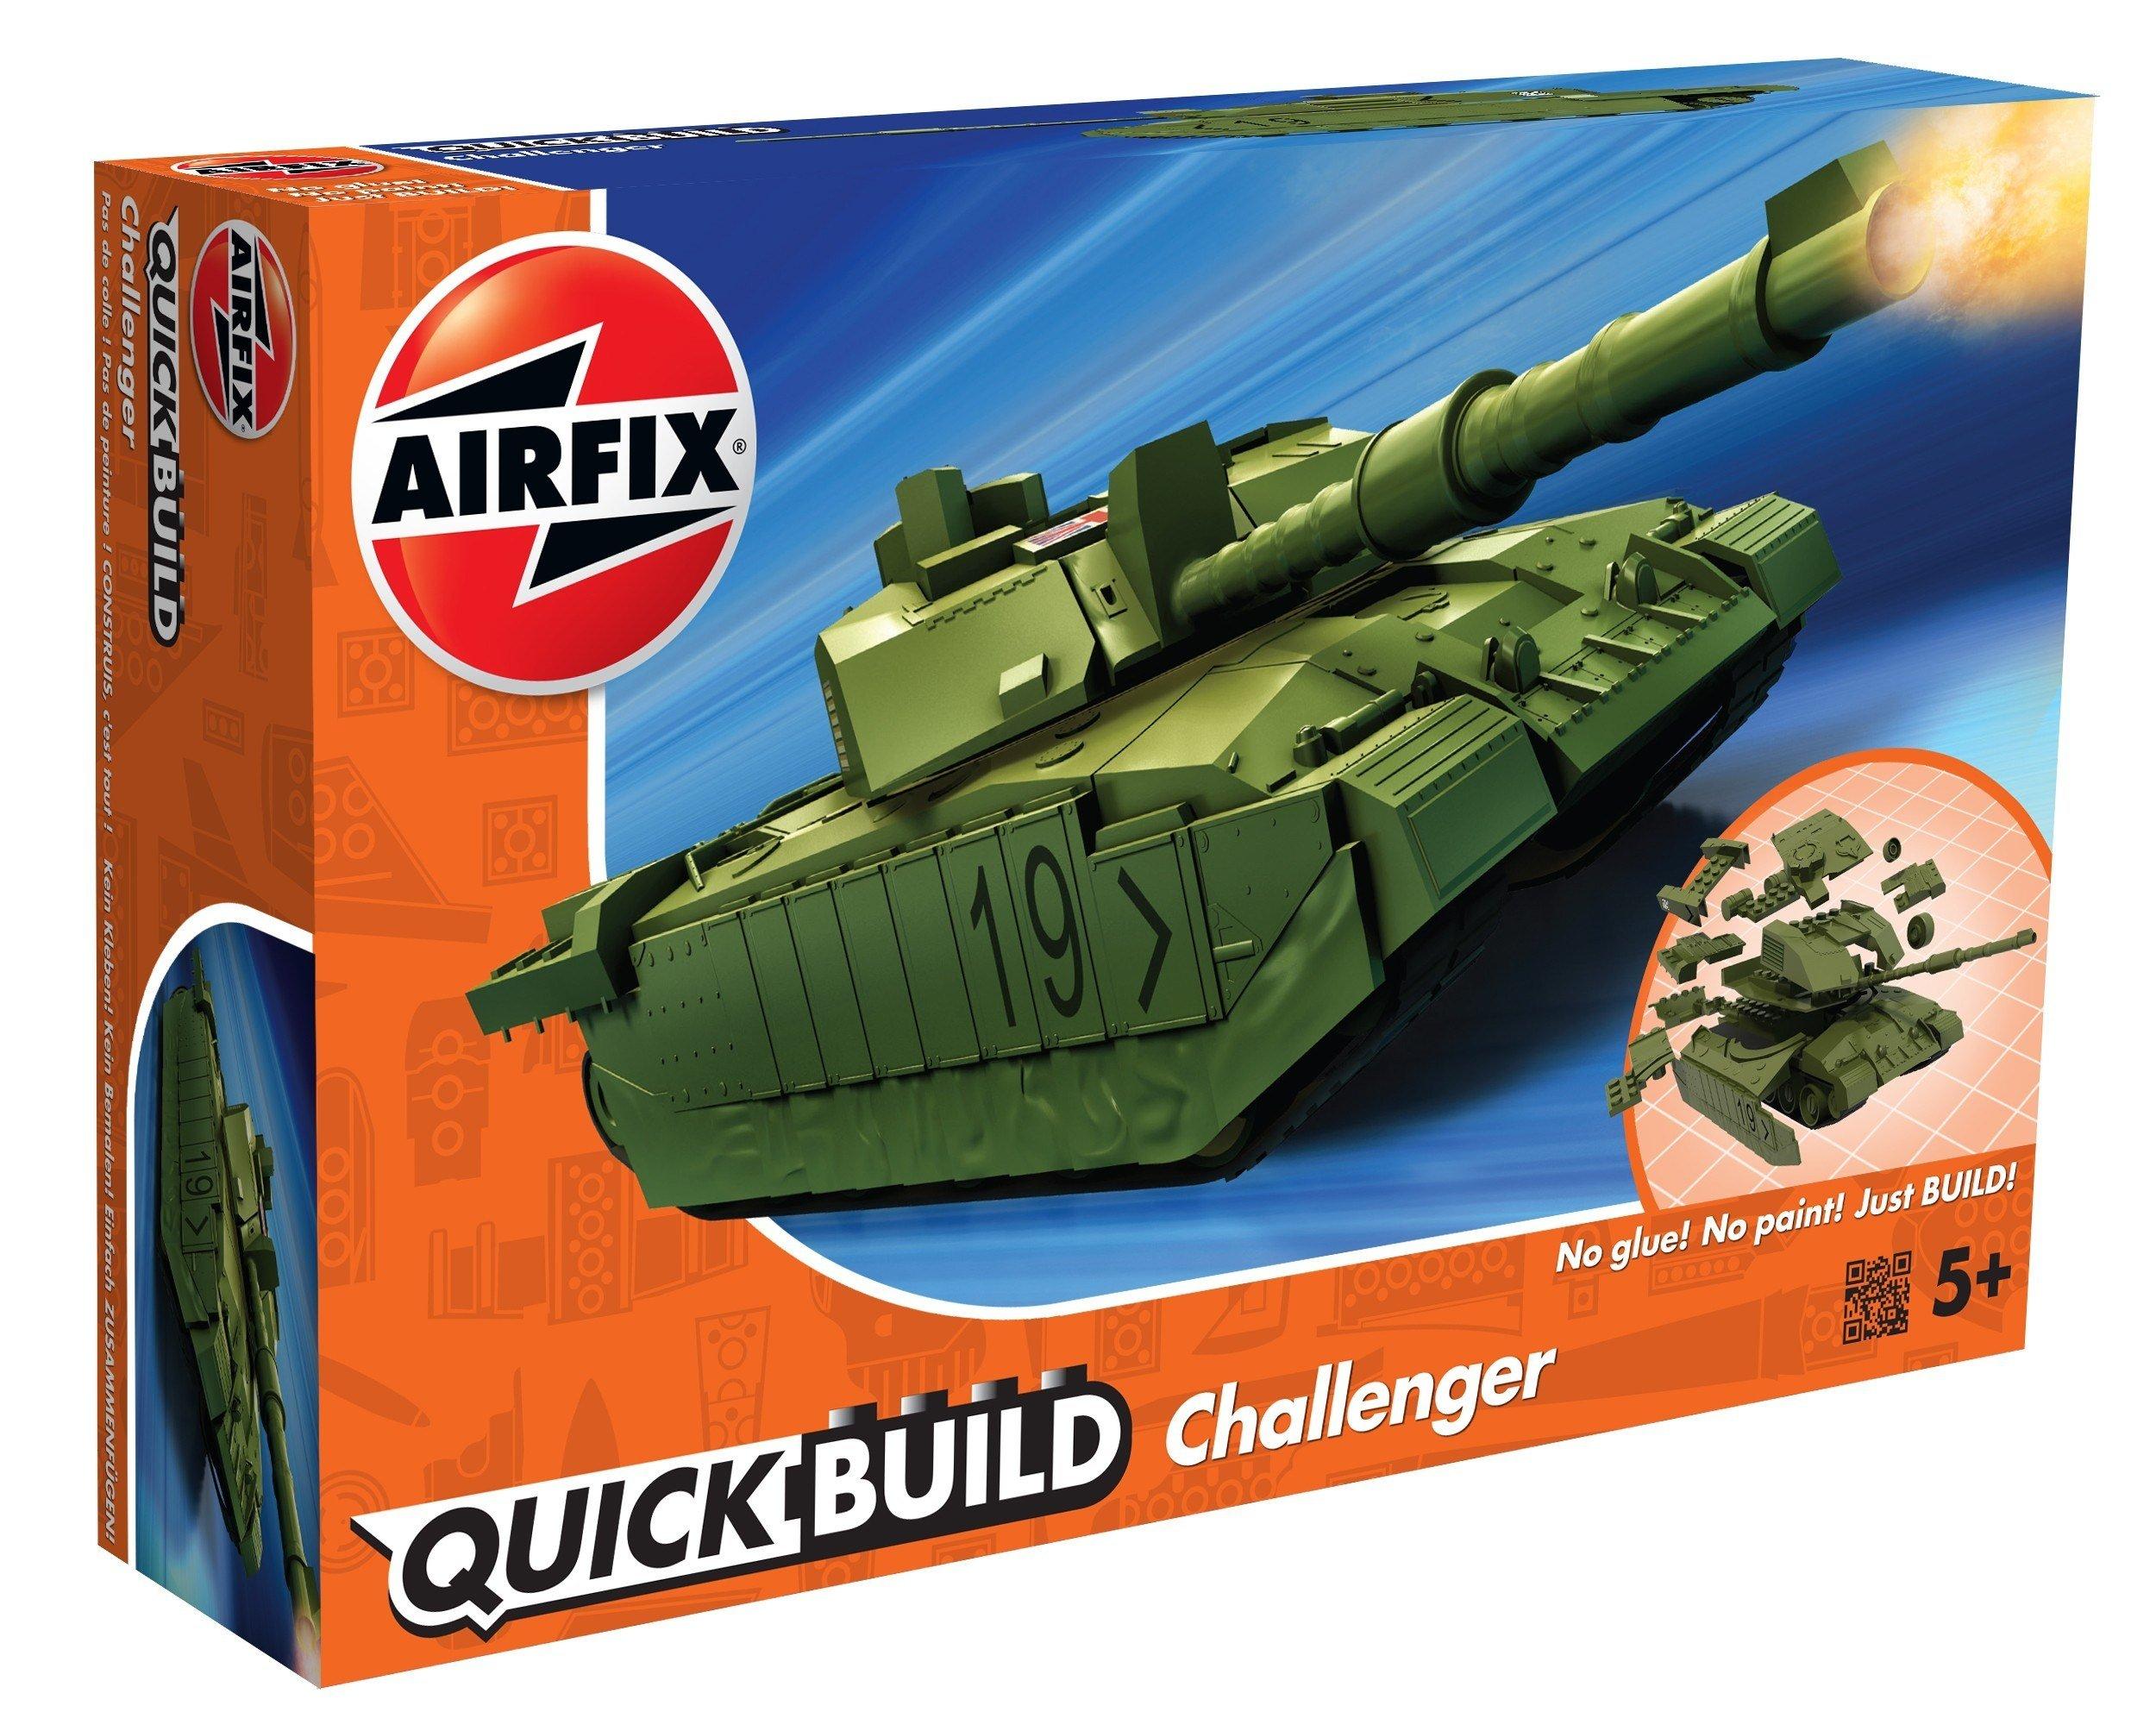 AIRFIX  Quickbuild Challenger Tank Green (35Teile) 